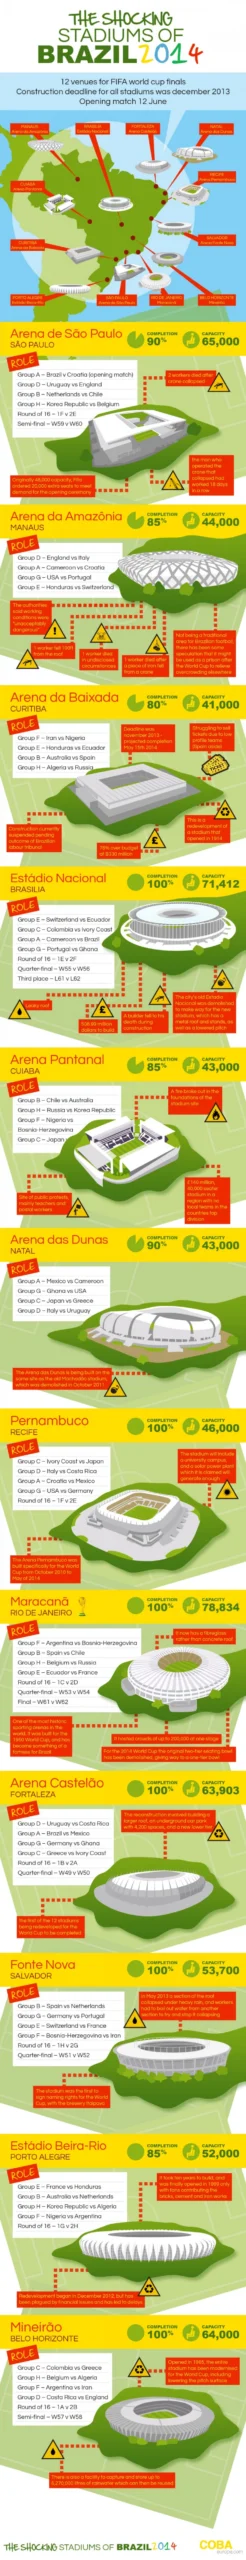 The Shocking Stadiums Of Brazil 2014
